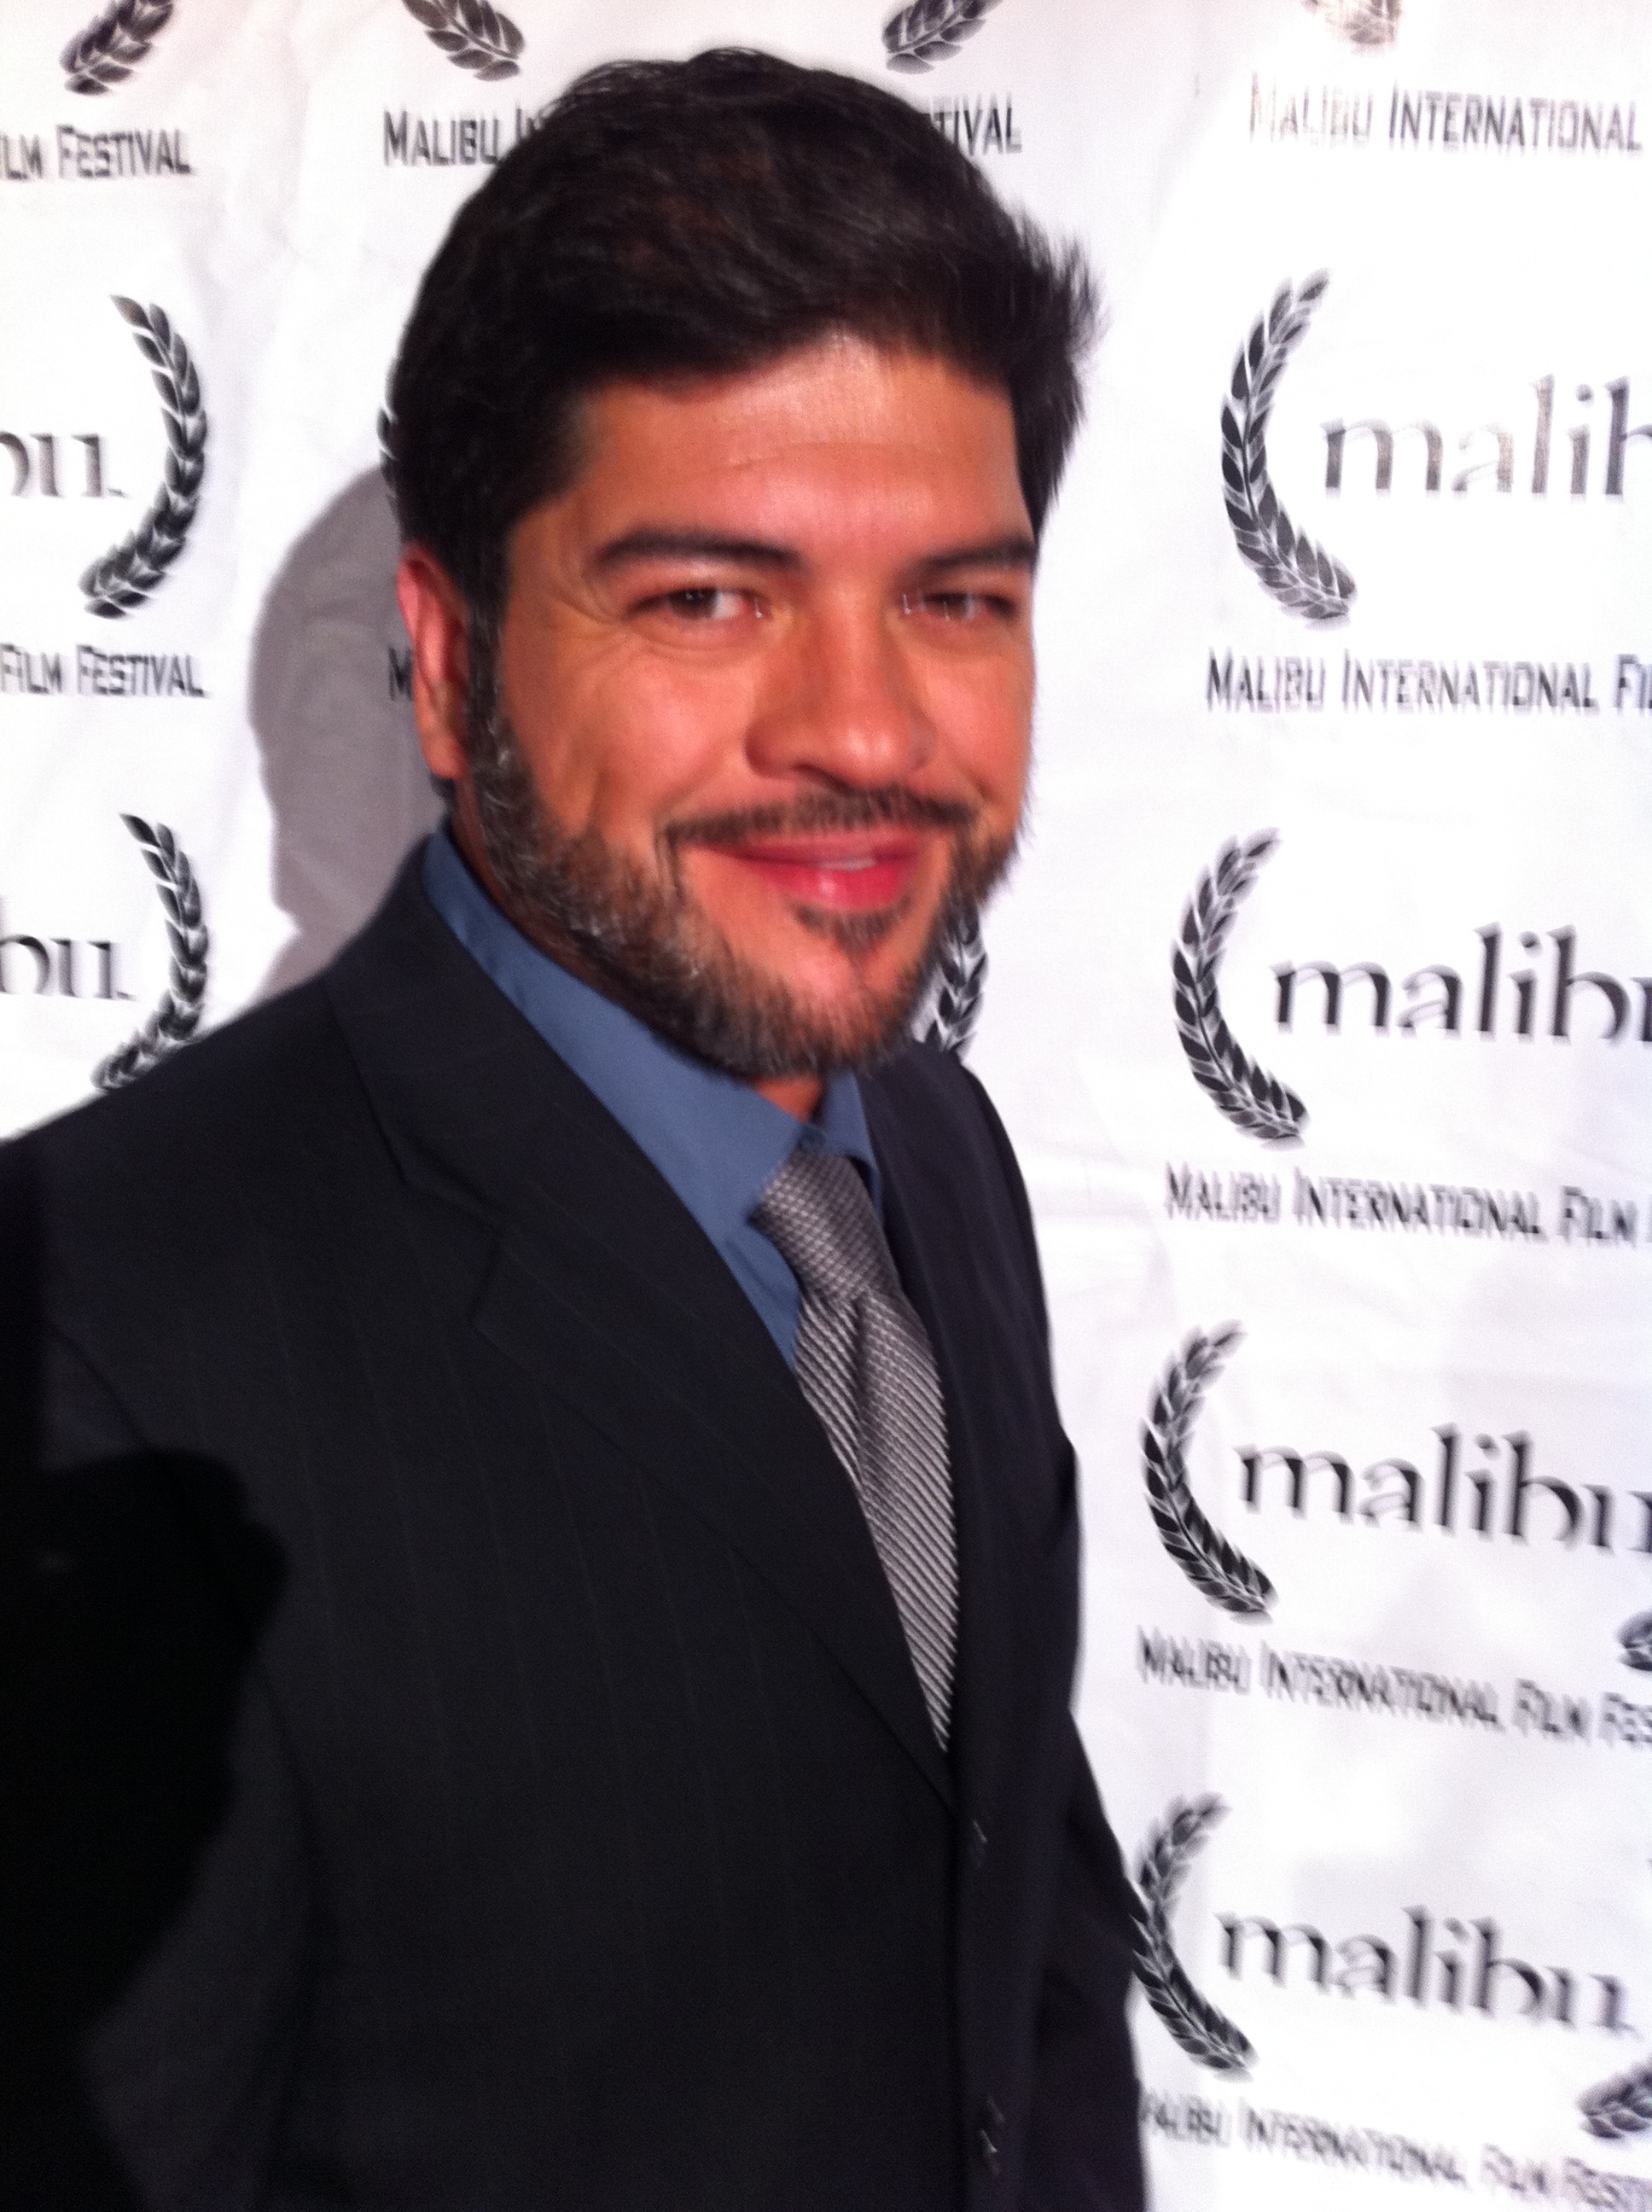 Red Carpet at the Malibu Film Festival 2011